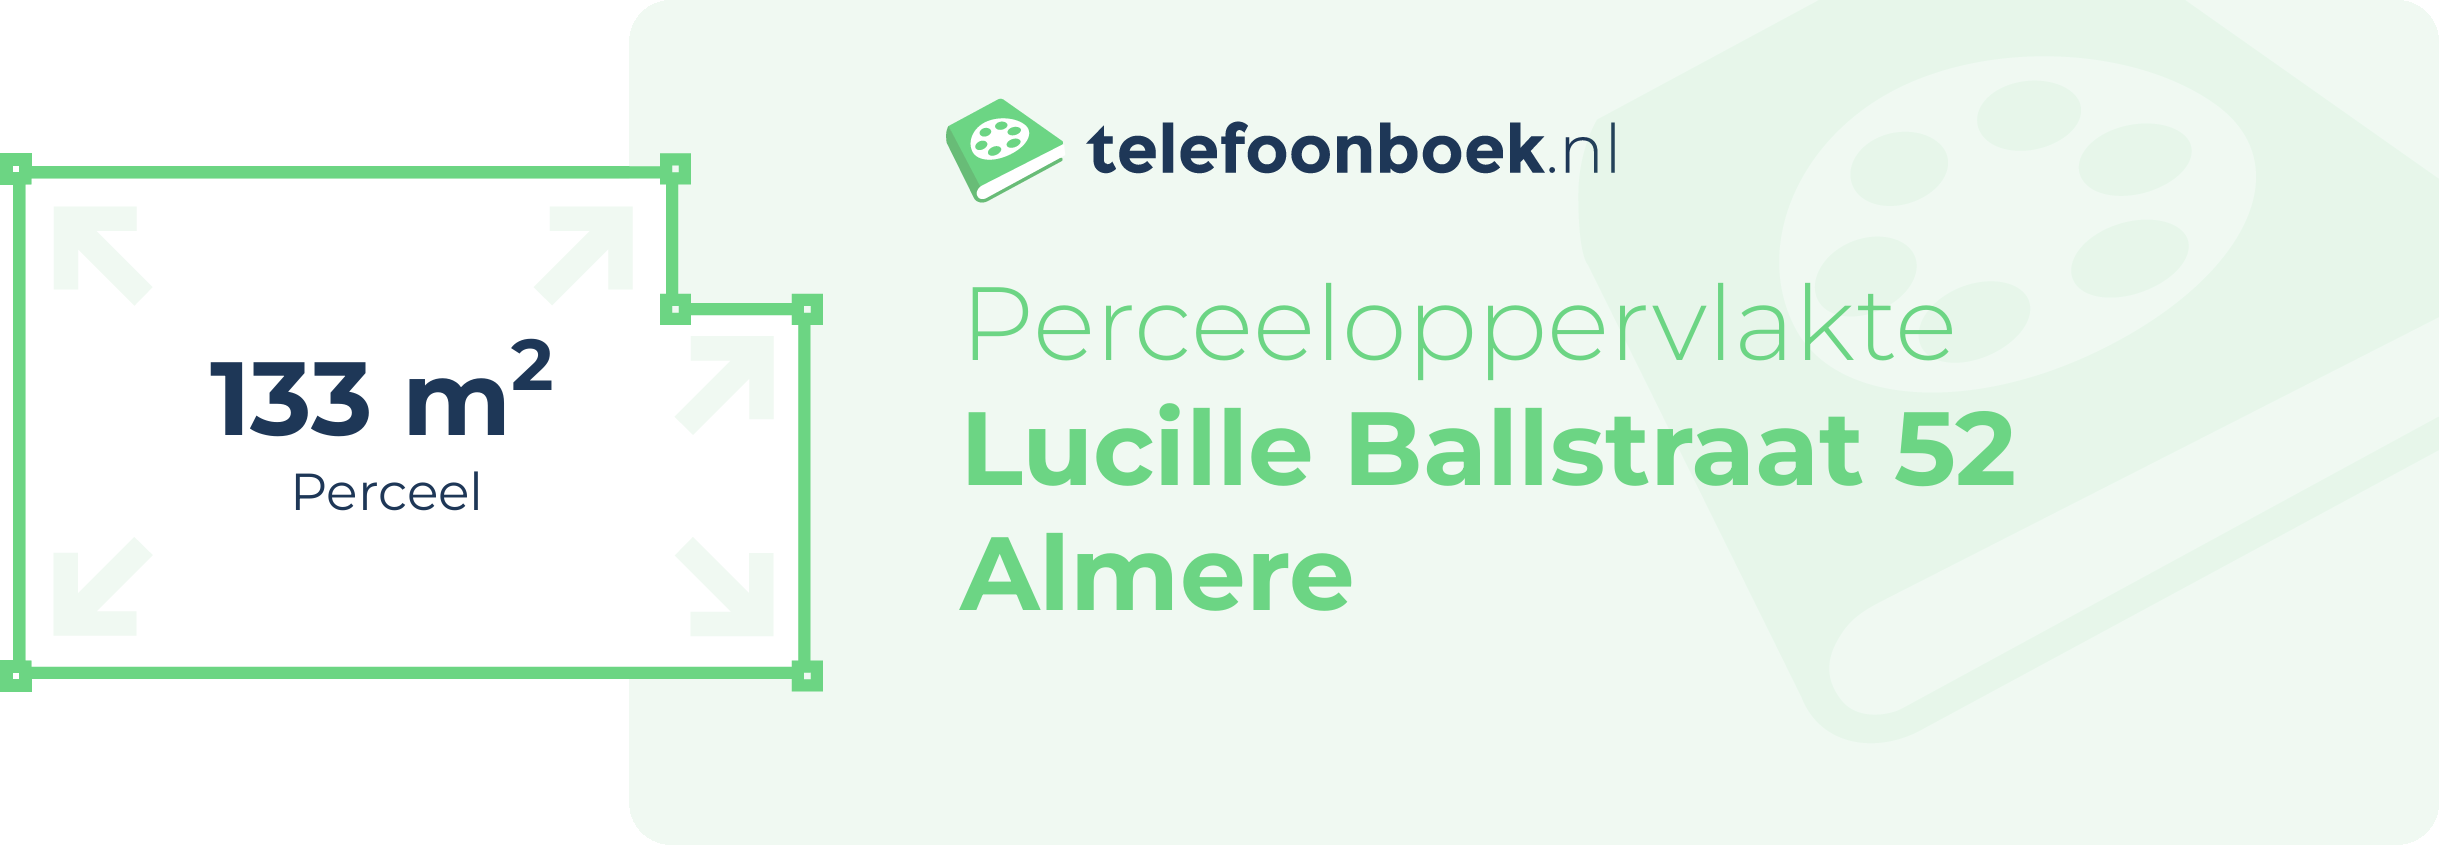 Perceeloppervlakte Lucille Ballstraat 52 Almere